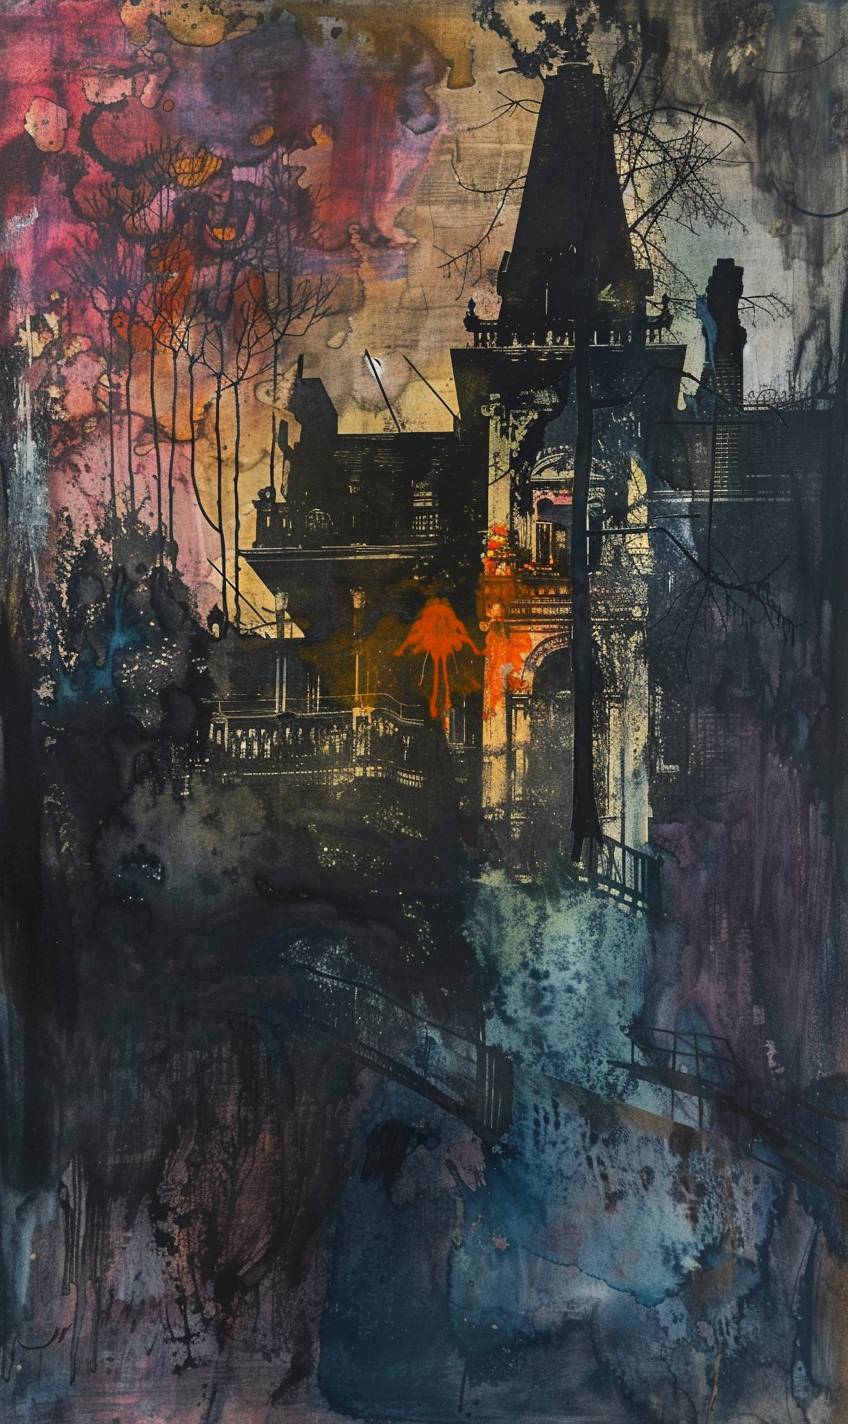 Helen Frankenthalerのスタイルに似て、神秘と暗闇に包まれた幽霊屋敷 --ar 3:5  --v 6.0